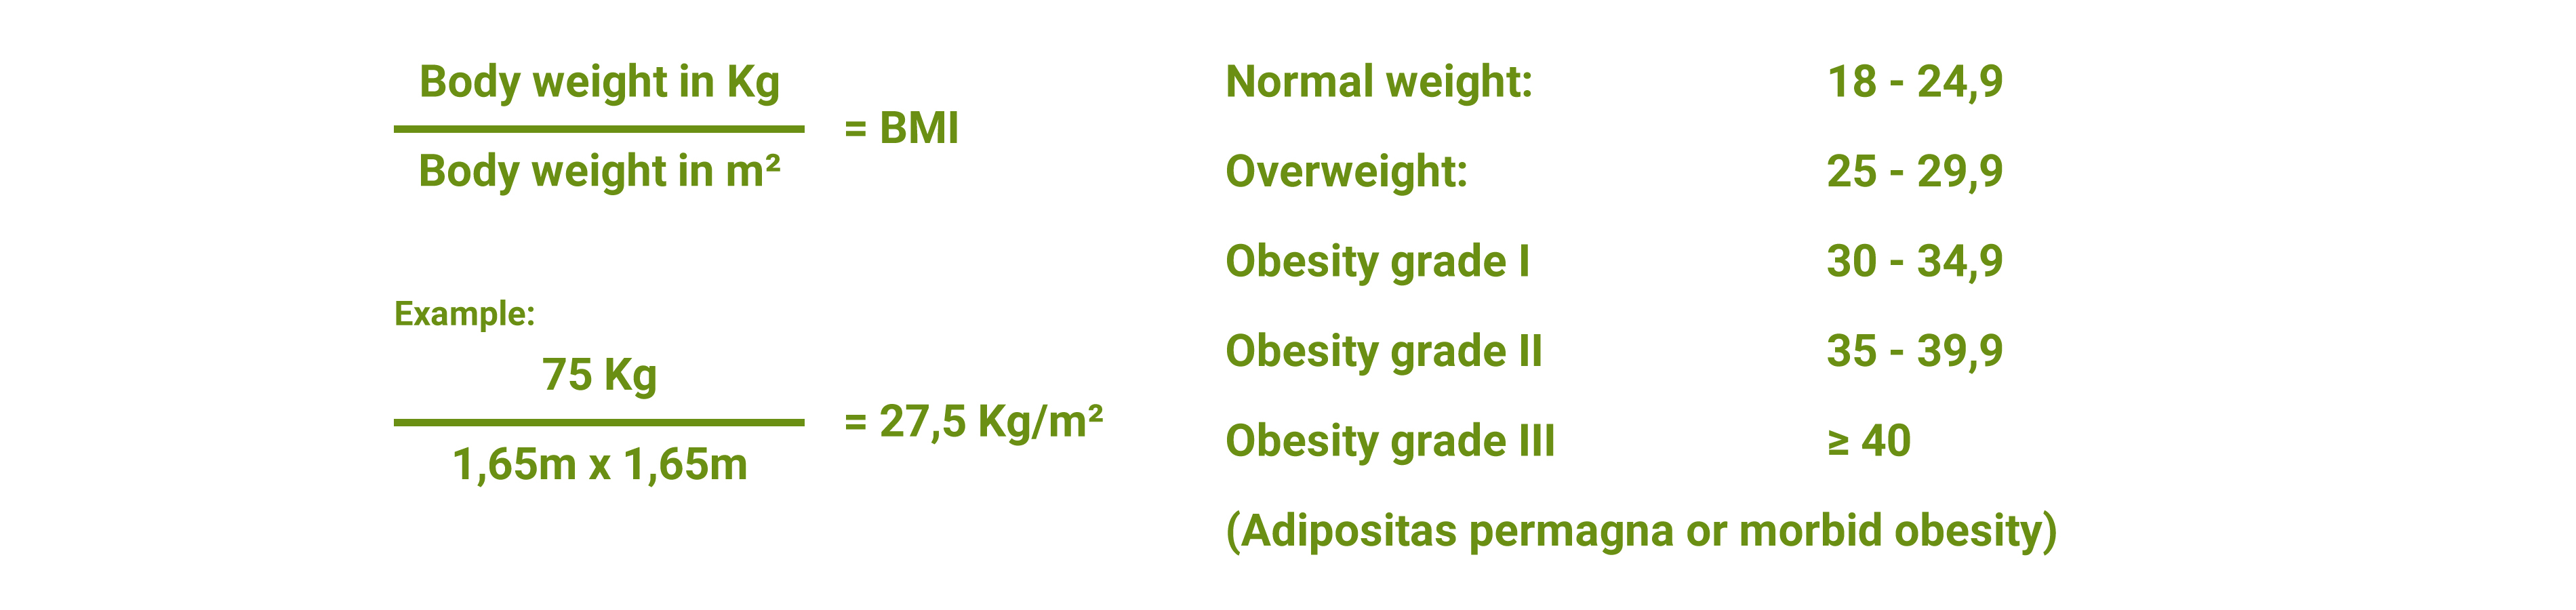 Body Mass Index (BMI) Calculator Online Obesity, overweight, obesity